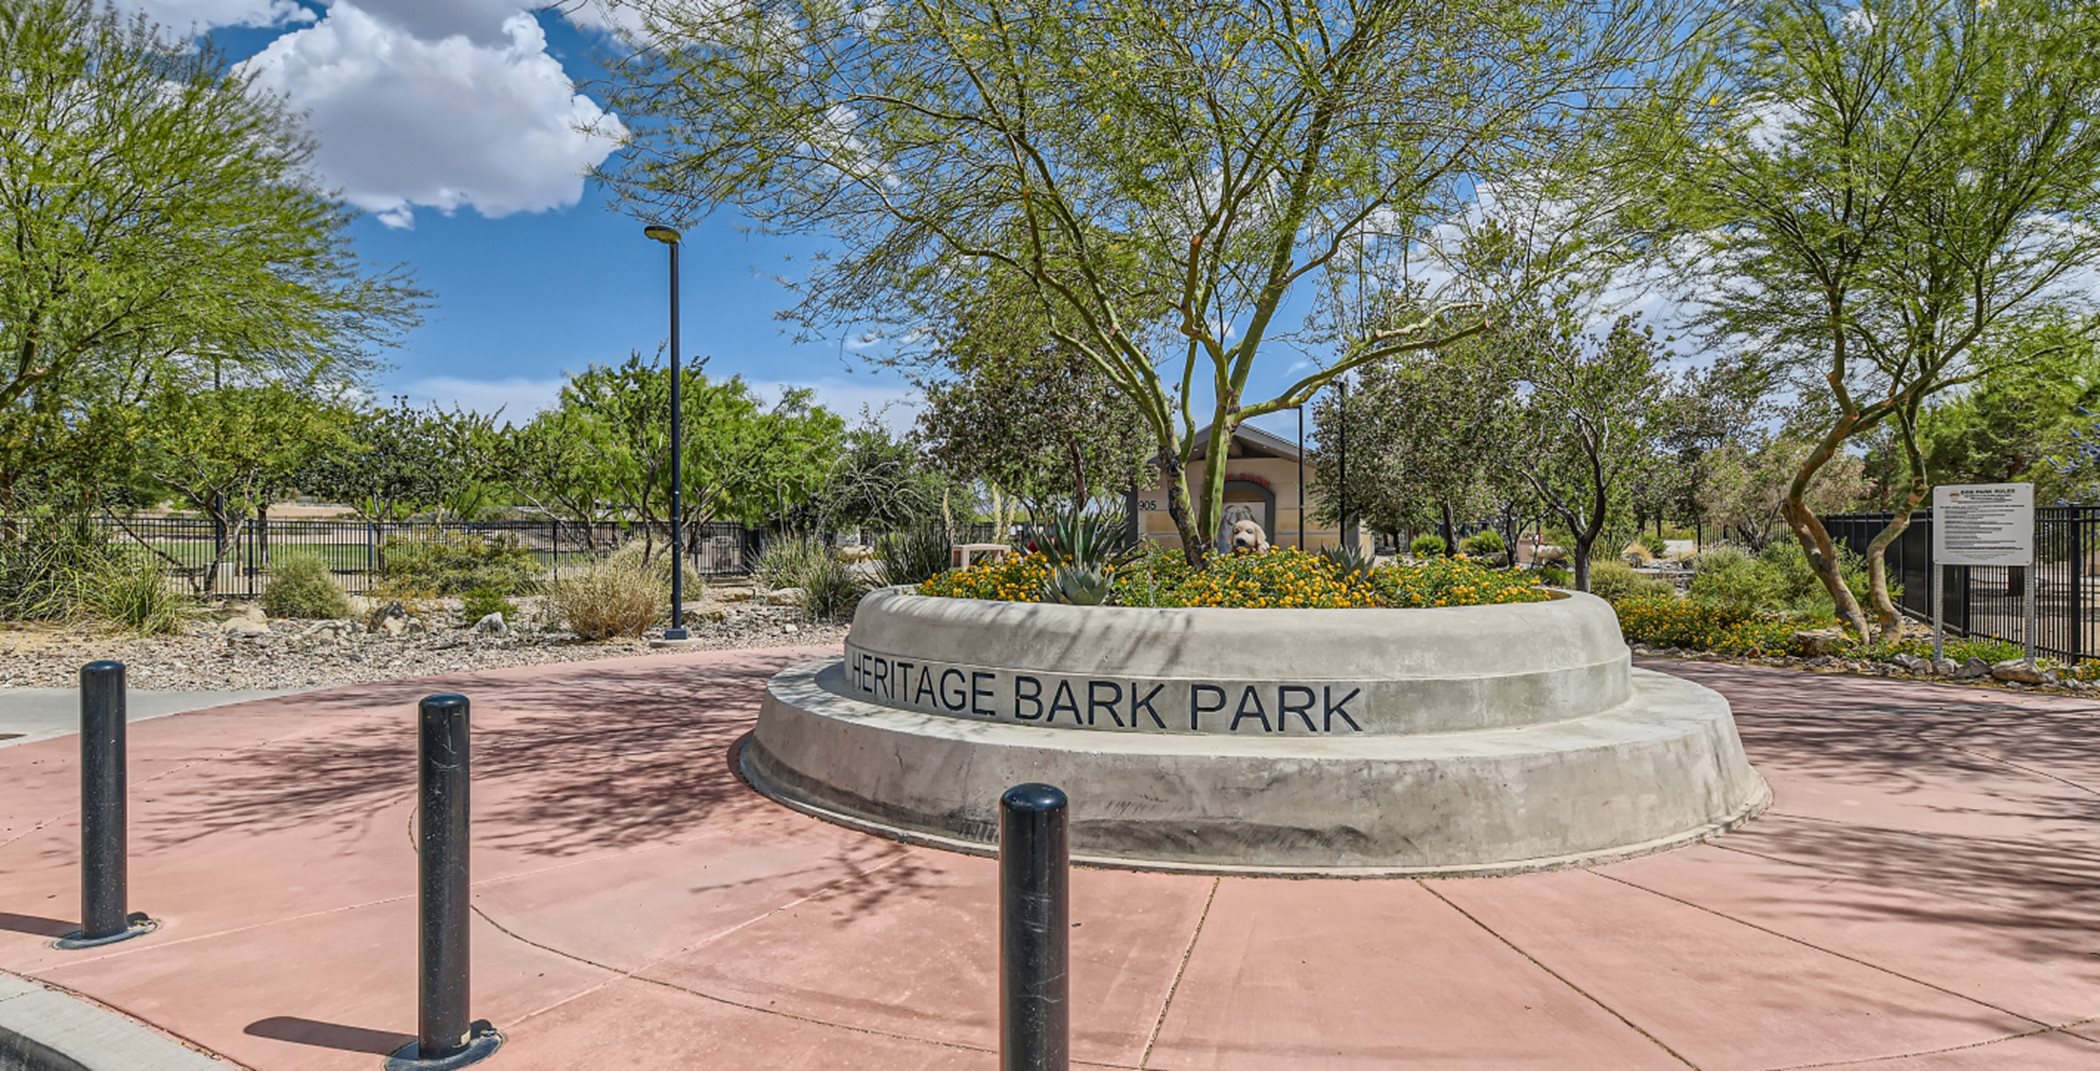 Heritage Bark Park